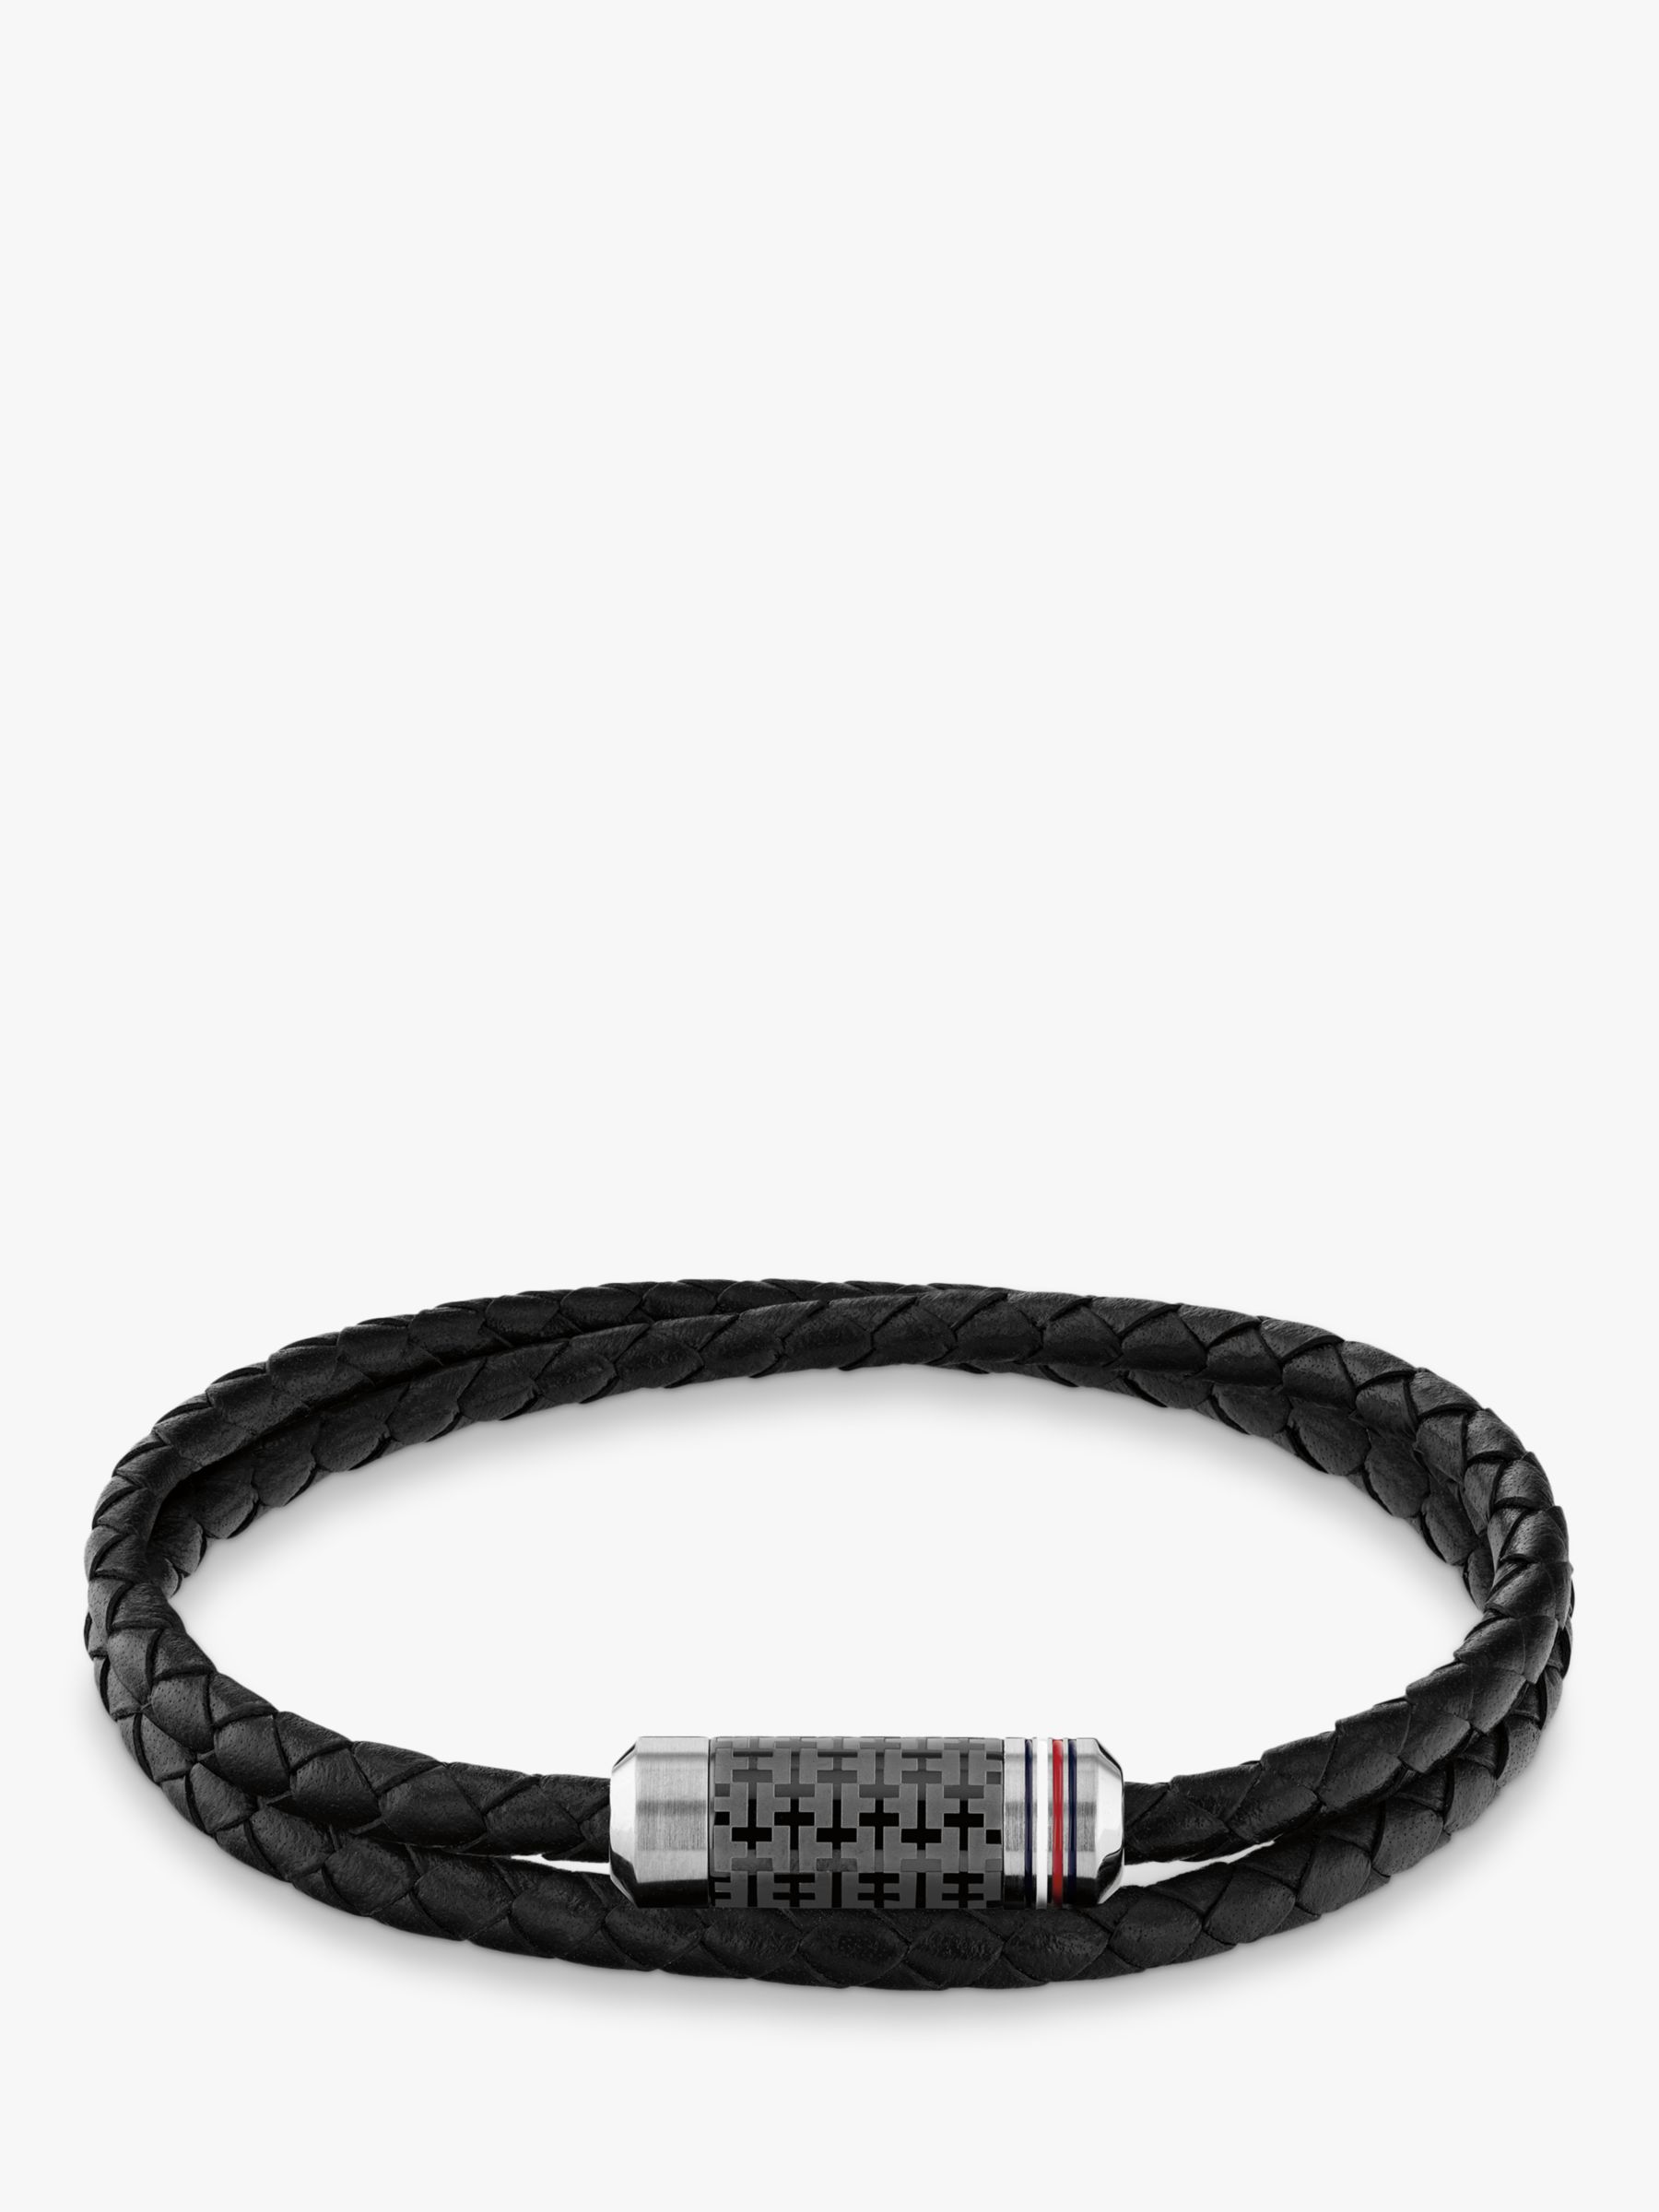 Tommy Hilfiger Men's Double Wrap Enamel Flag Leather Bracelet, Black